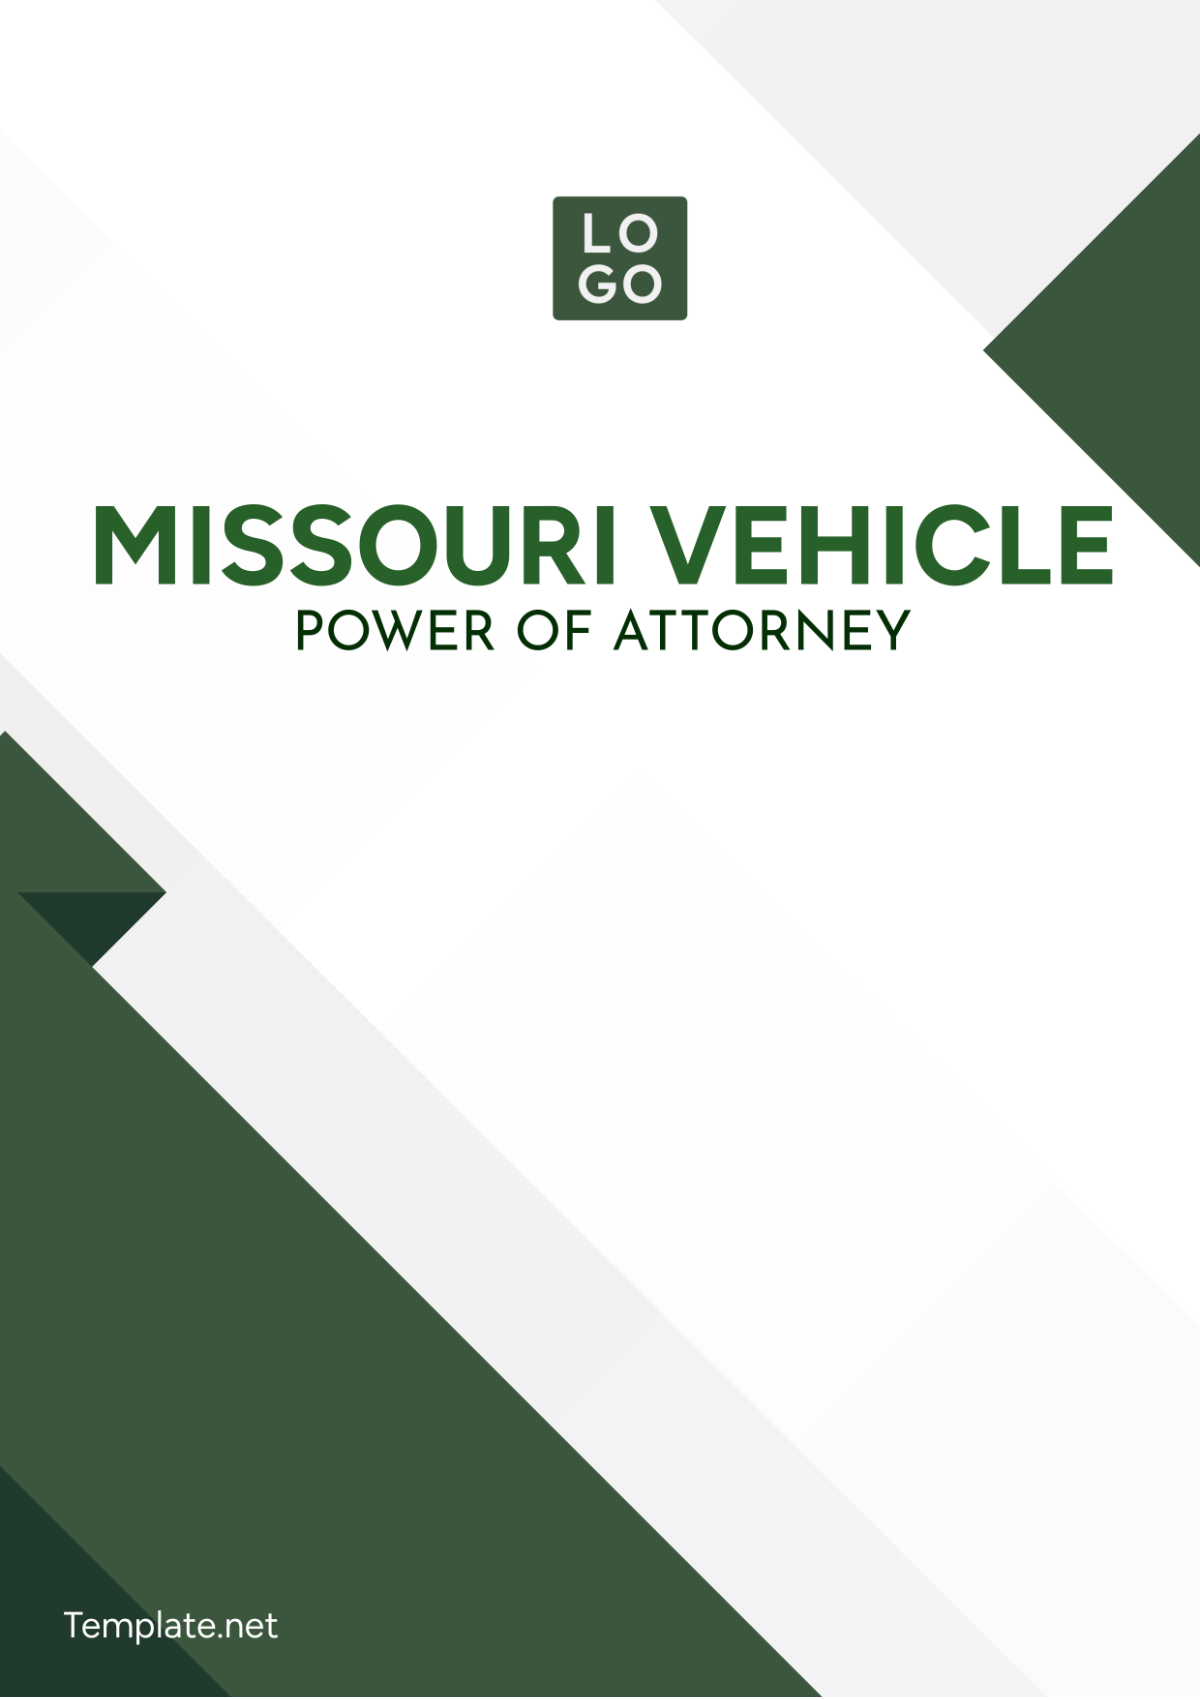 Missouri Vehicle Power of Attorney Template